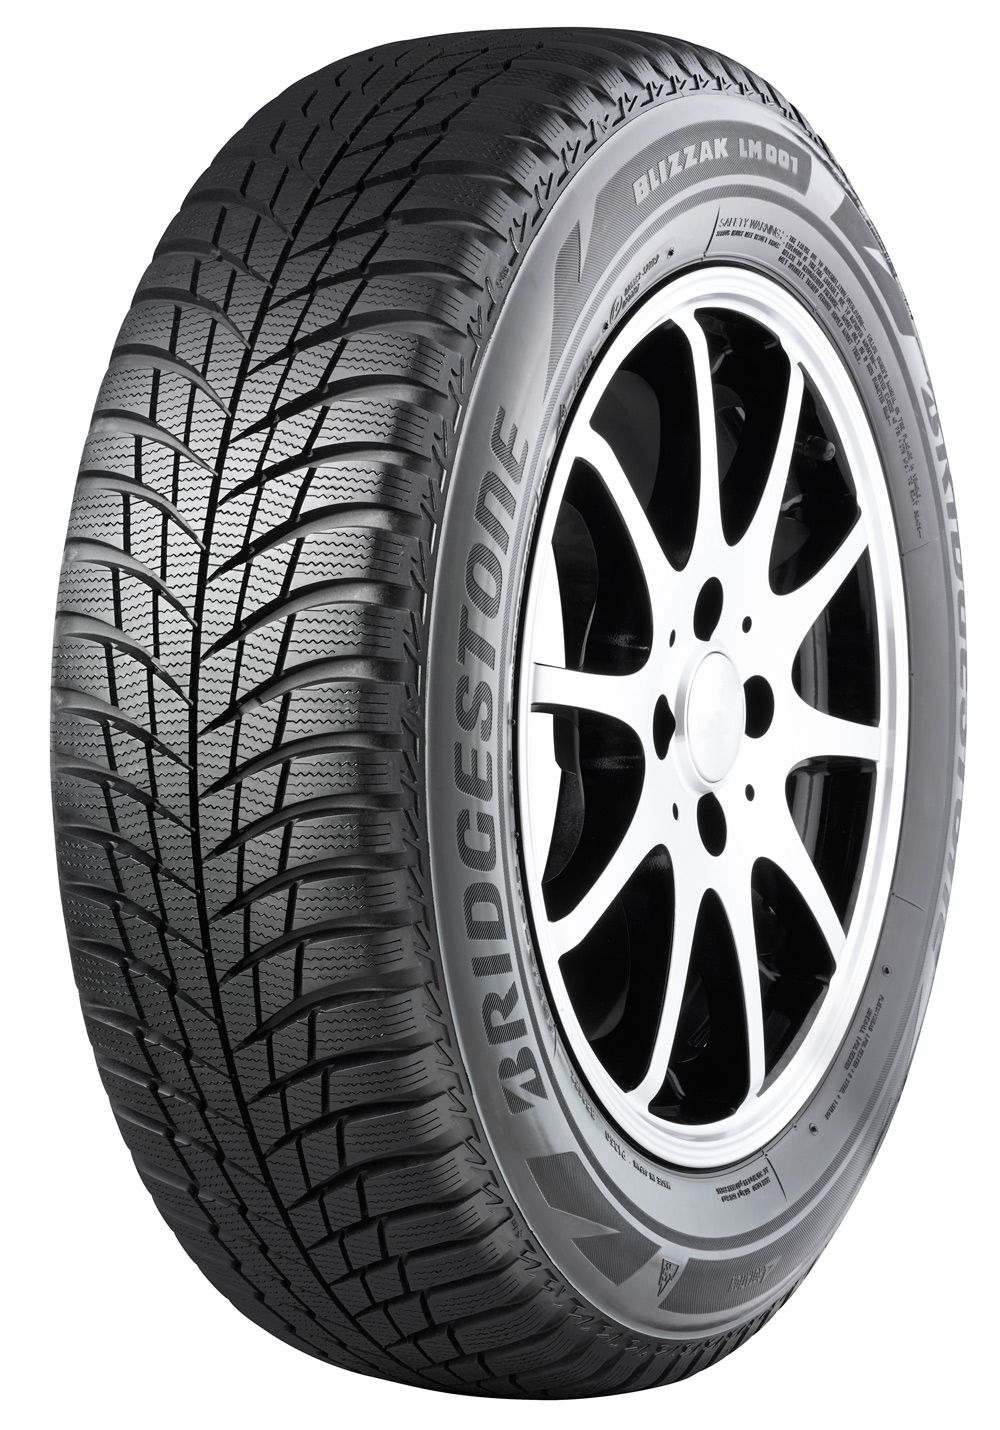 Buy cheap Bridgestone Blizzak LM-32 tyres from your local Setyres